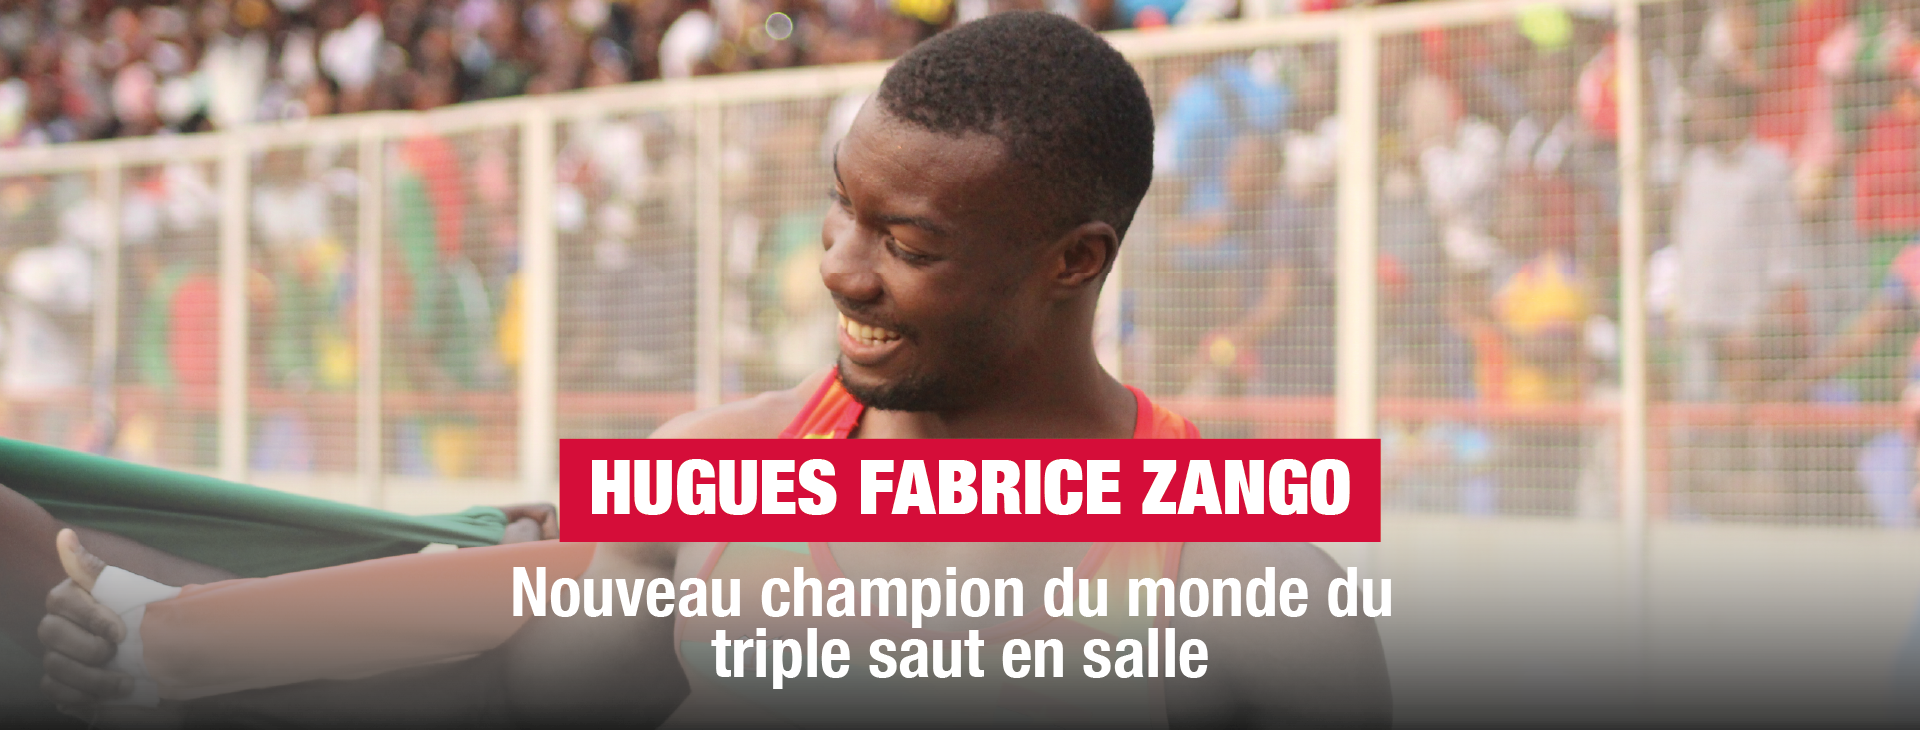 Hugues Fabrice Zango Championn du monde